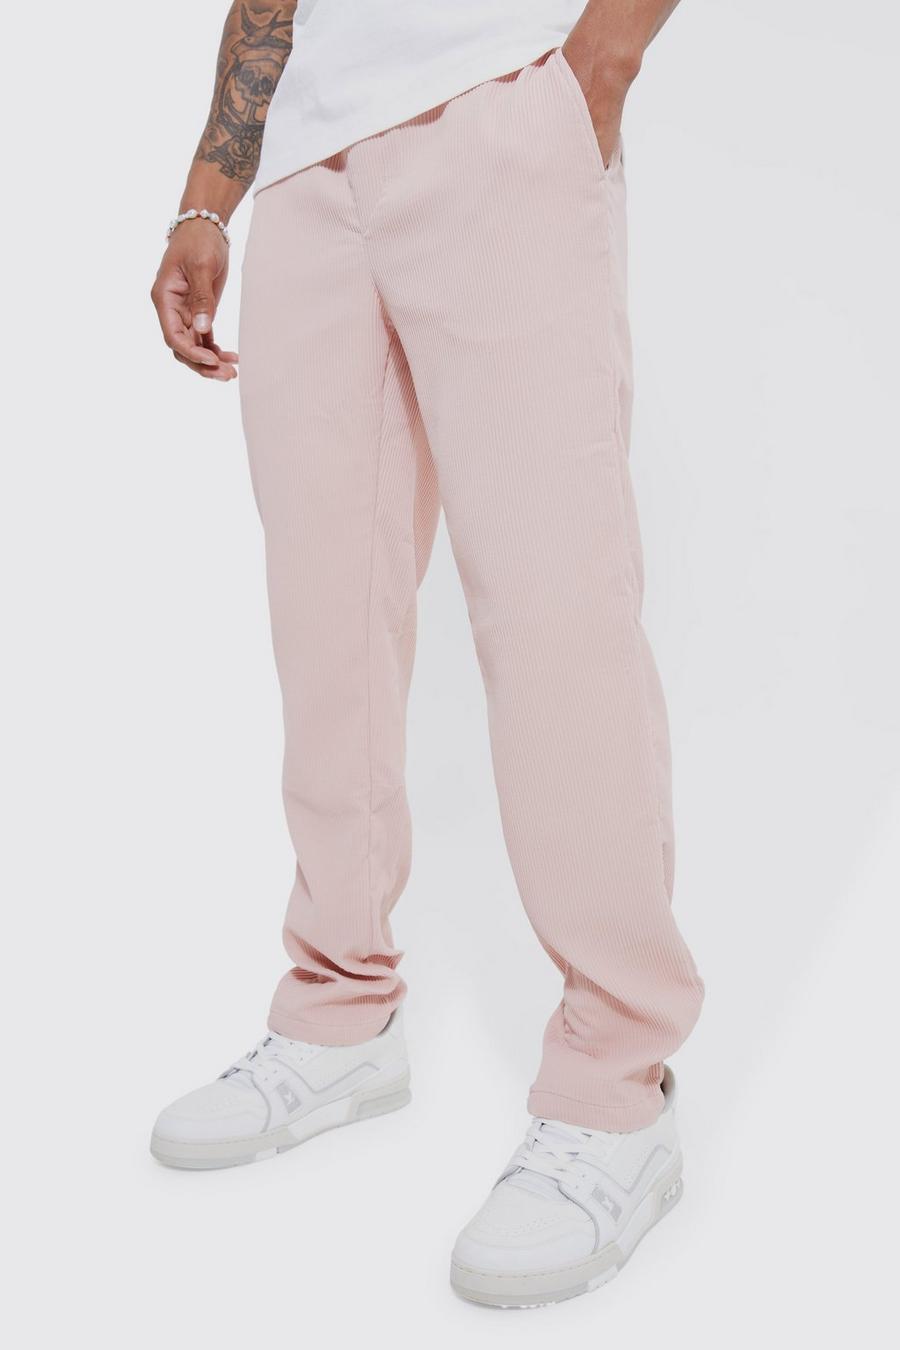 Pantalon court plissé, Light pink